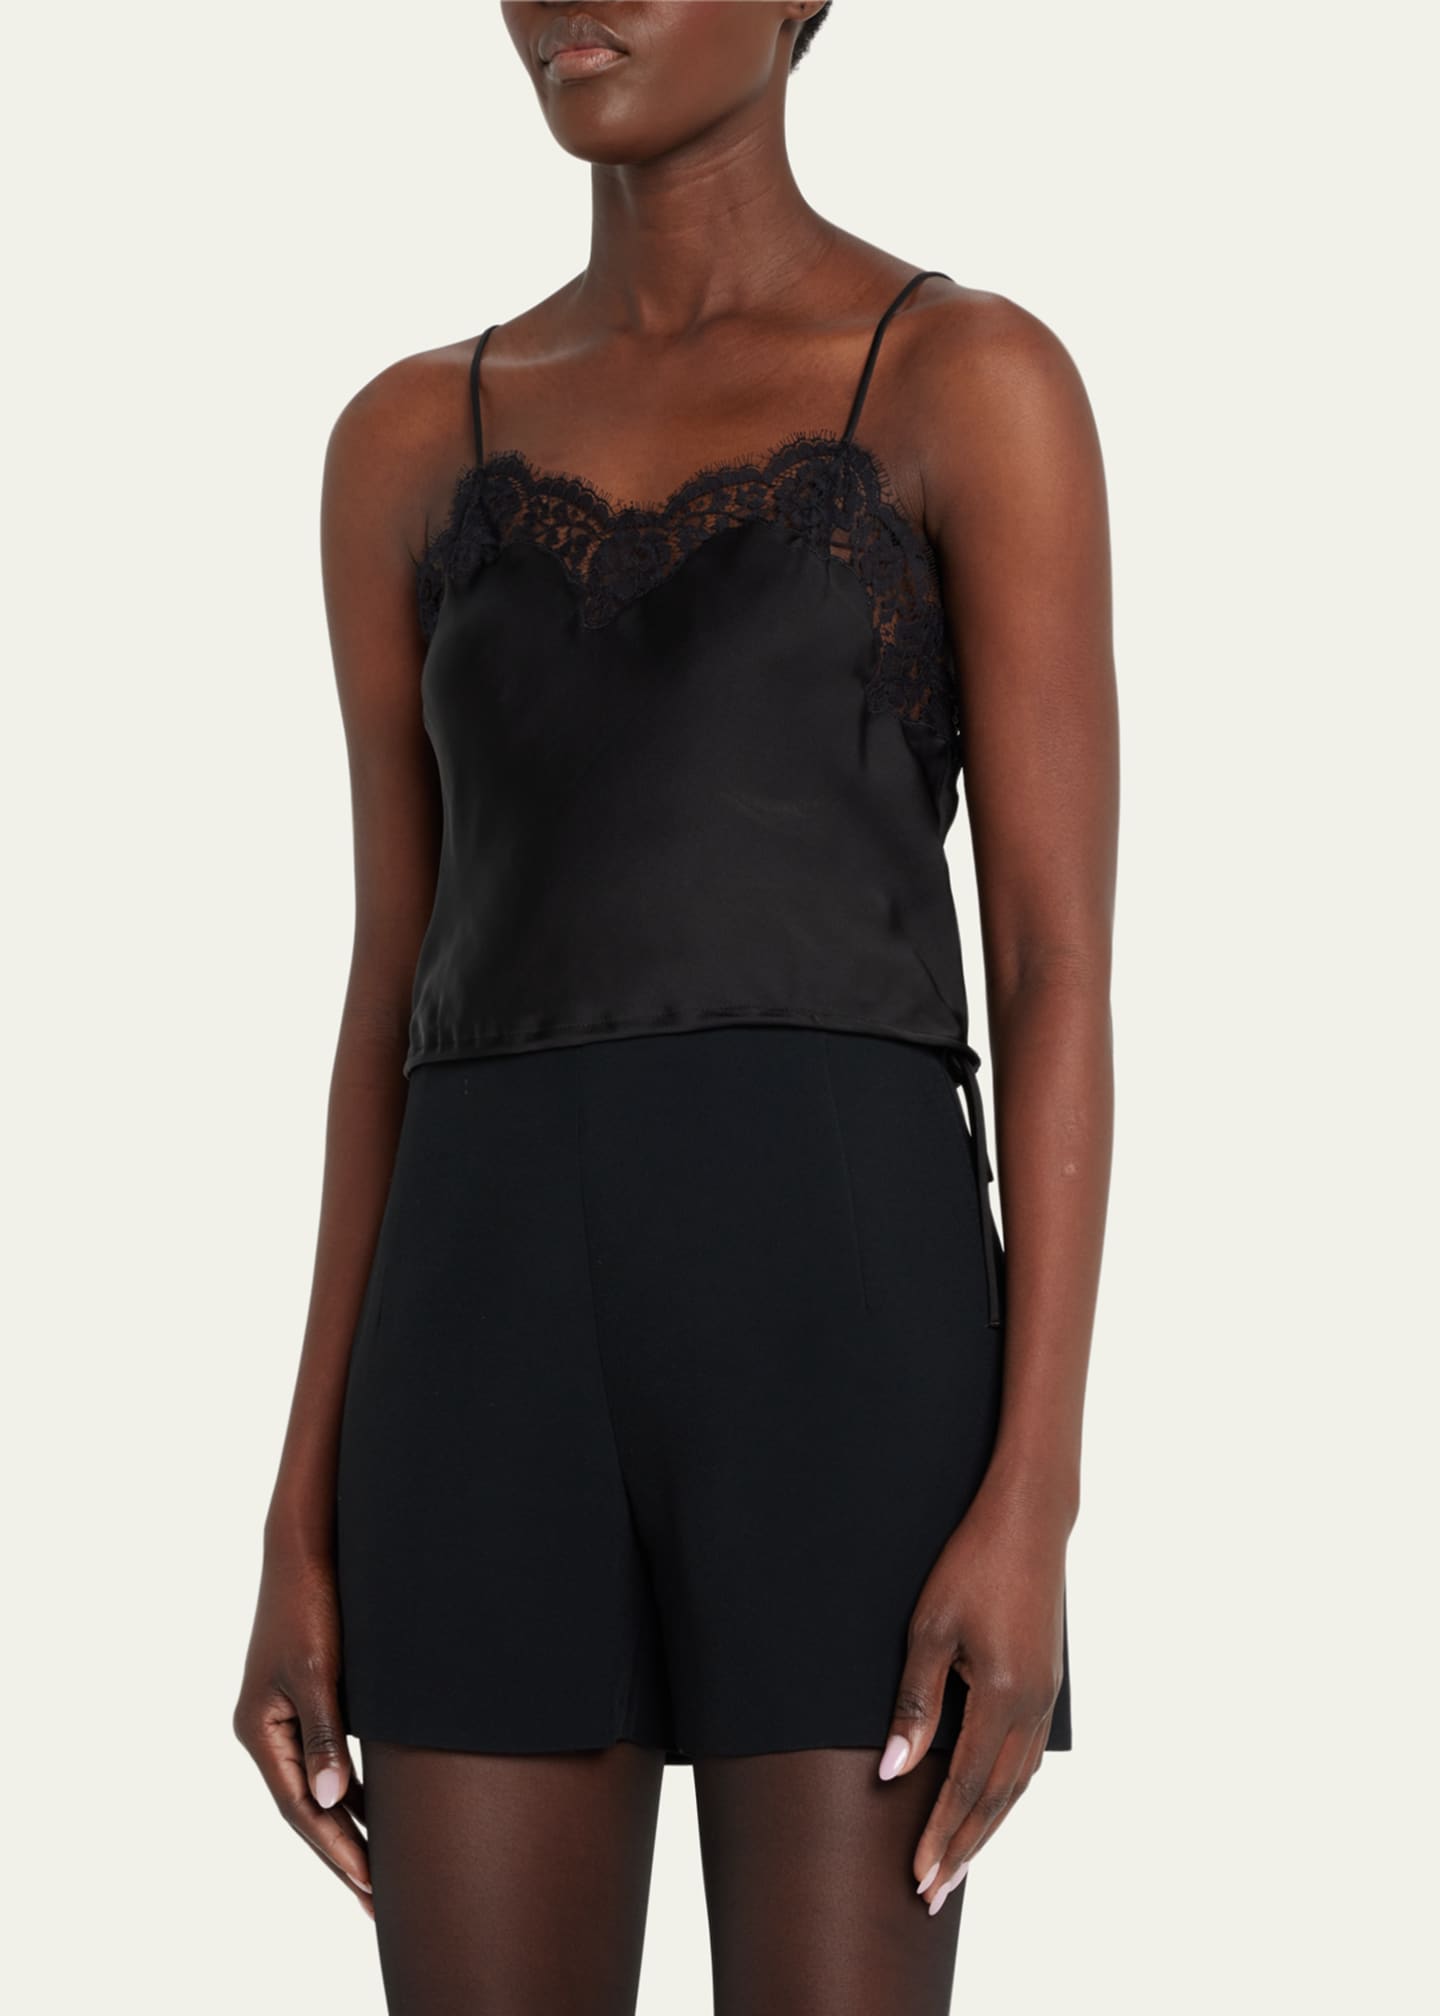 Saint Laurent Chain Trim Cami Dress, $2,326, farfetch.com